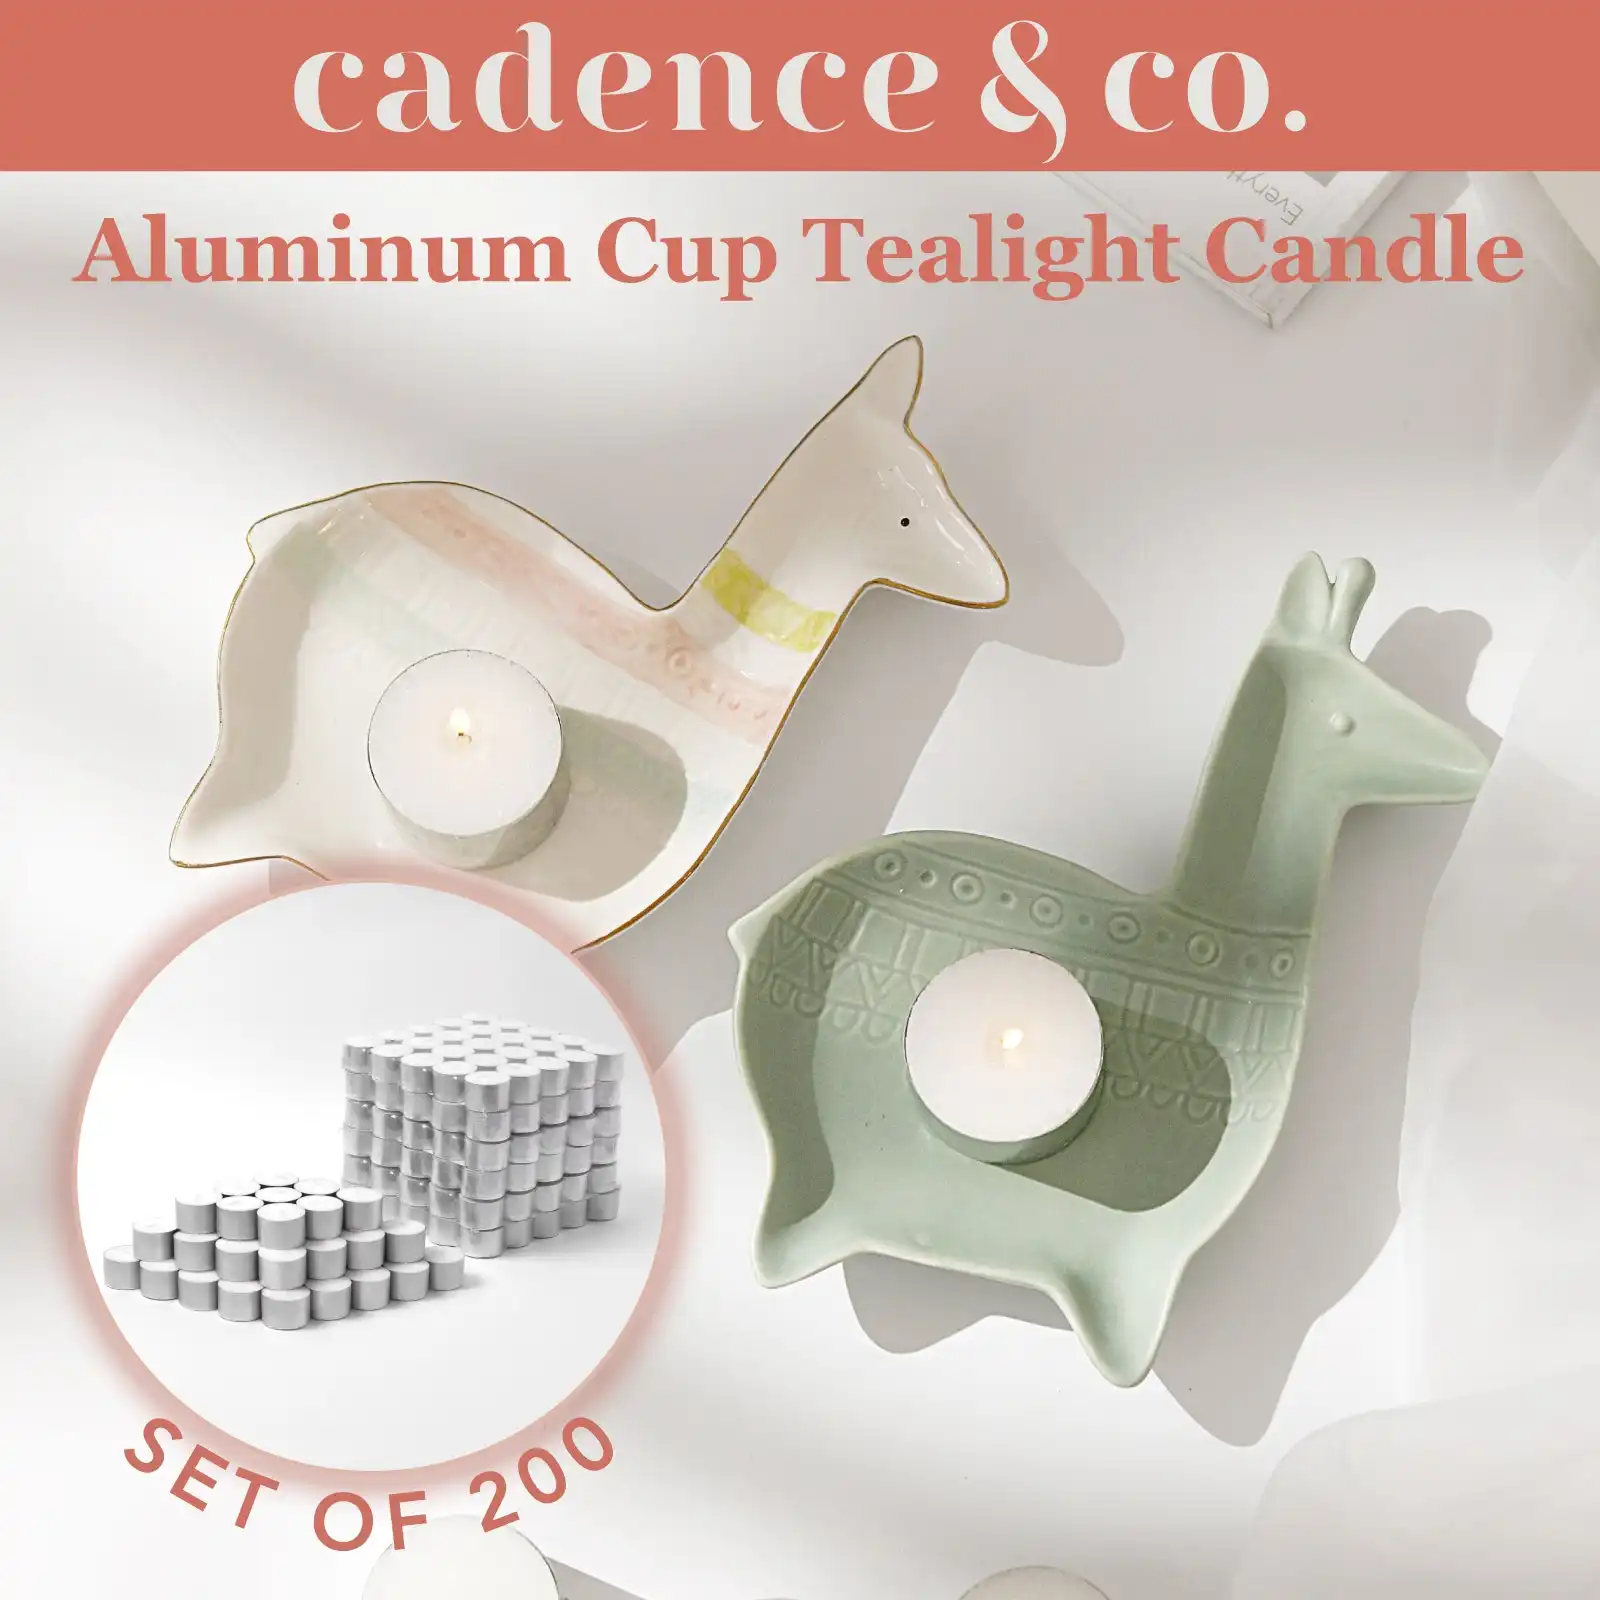 Cadence & Co Aluminum Cup Tealight Candle Set 200